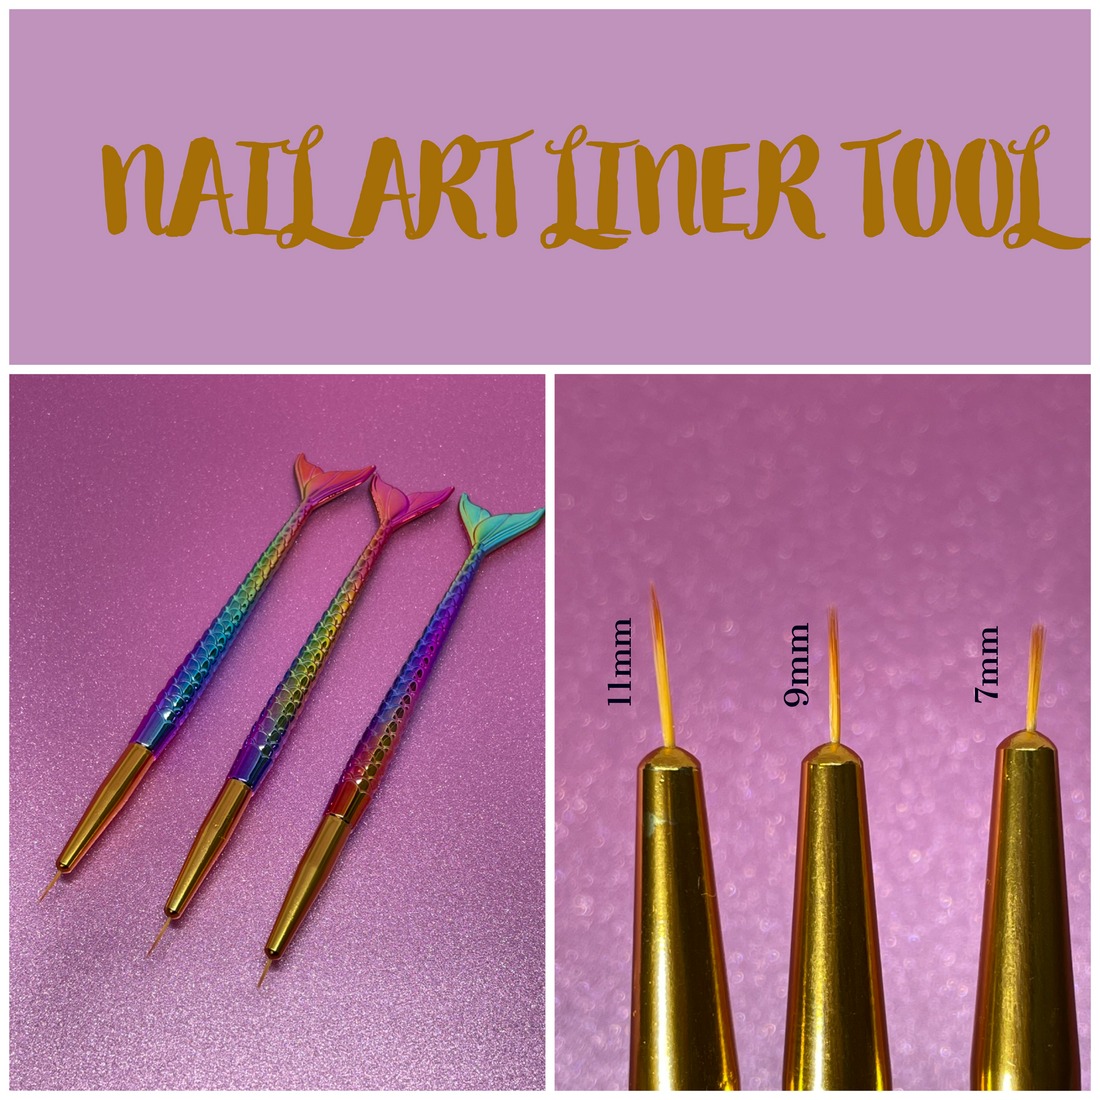 3 Pieces Nail Art Liner Tool.jpg